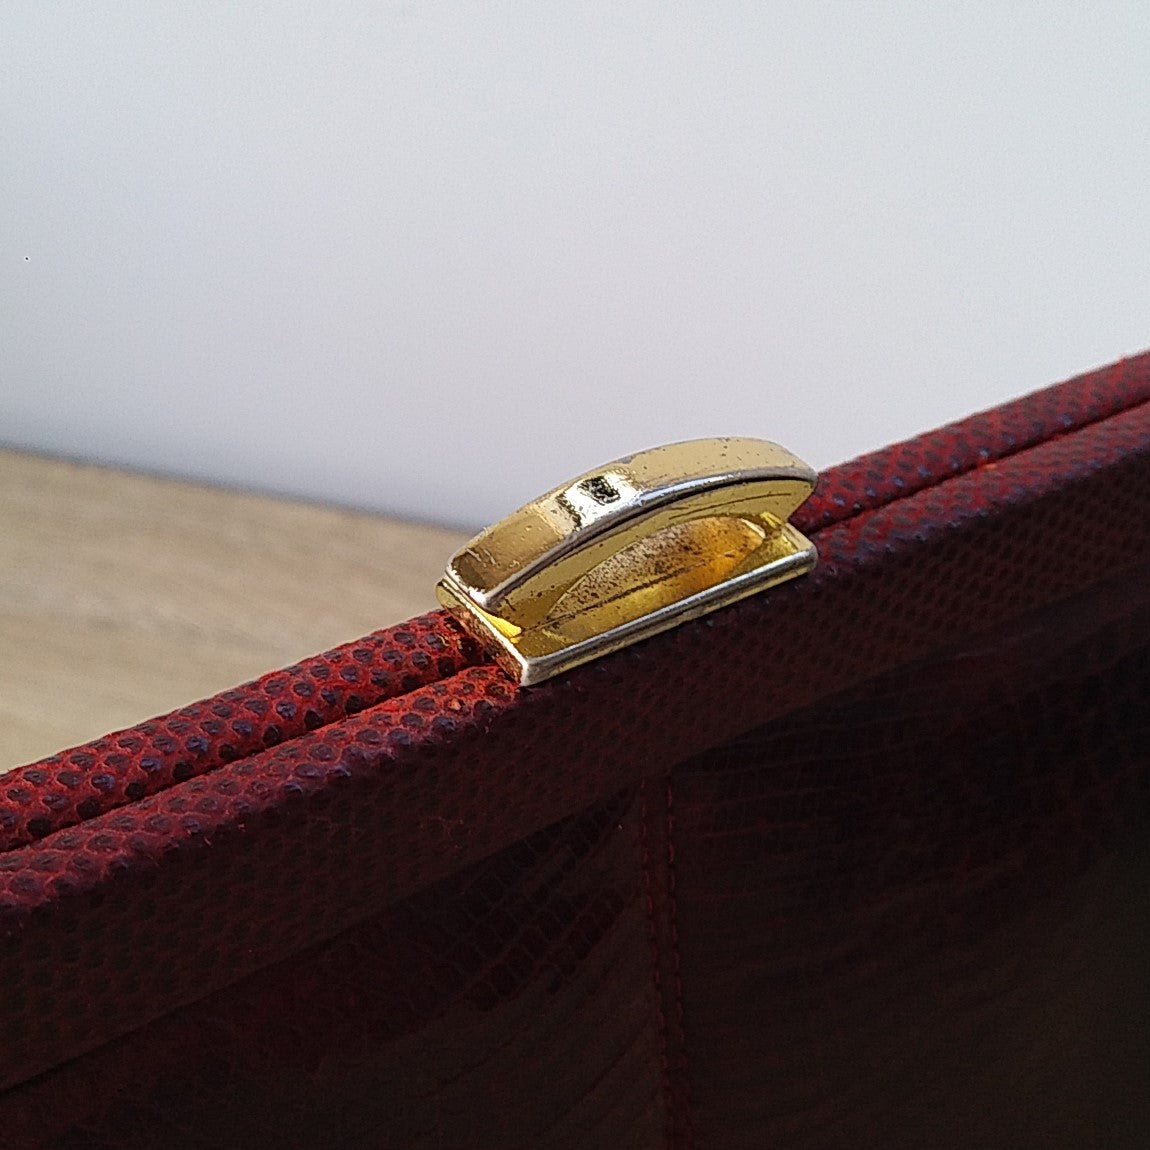 Vintage Bag - Red Lizard Leather Clutch